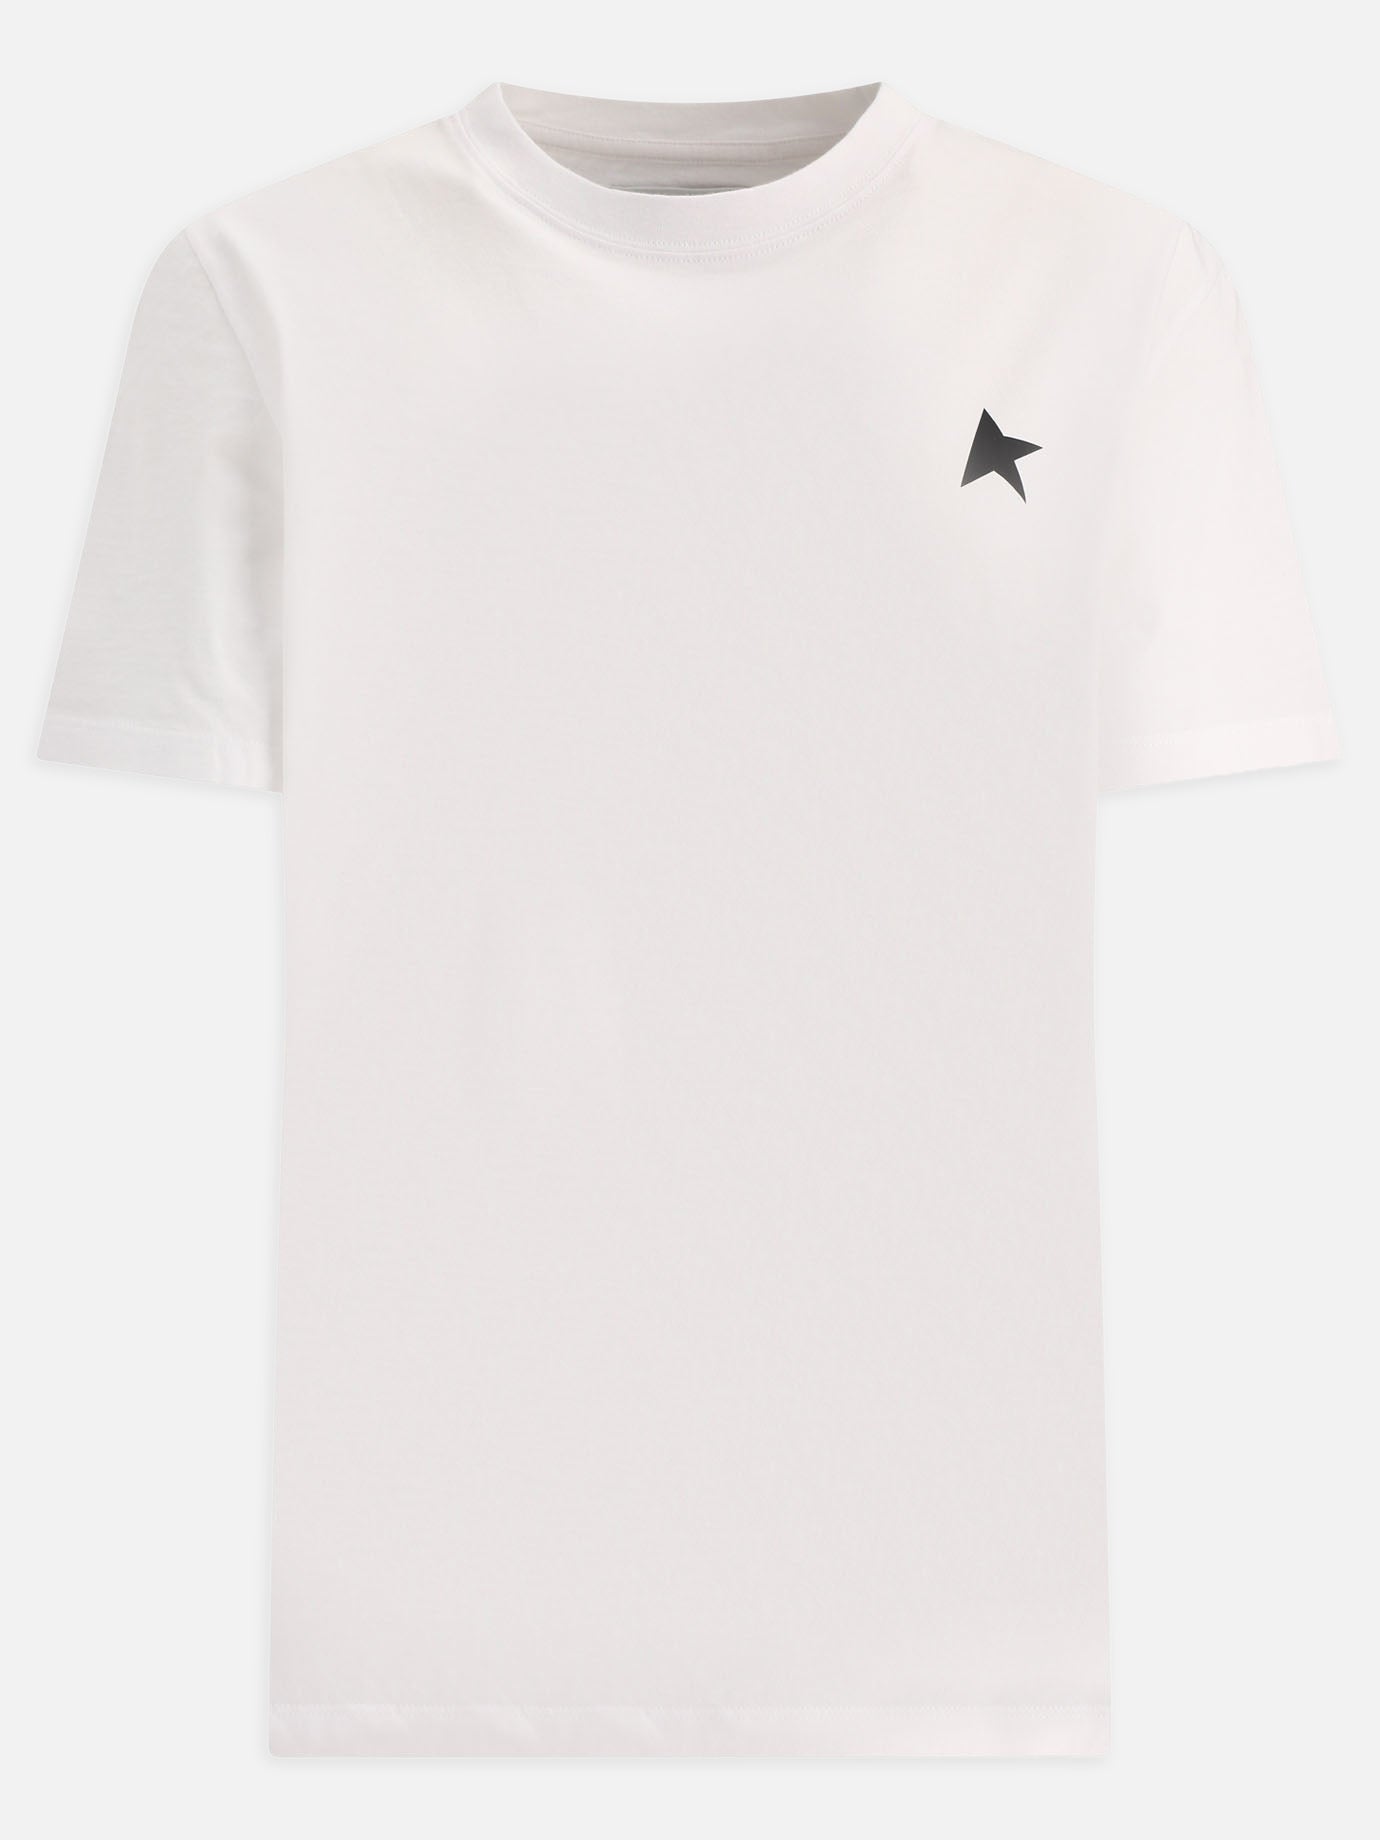 "Small Star" t-shirt